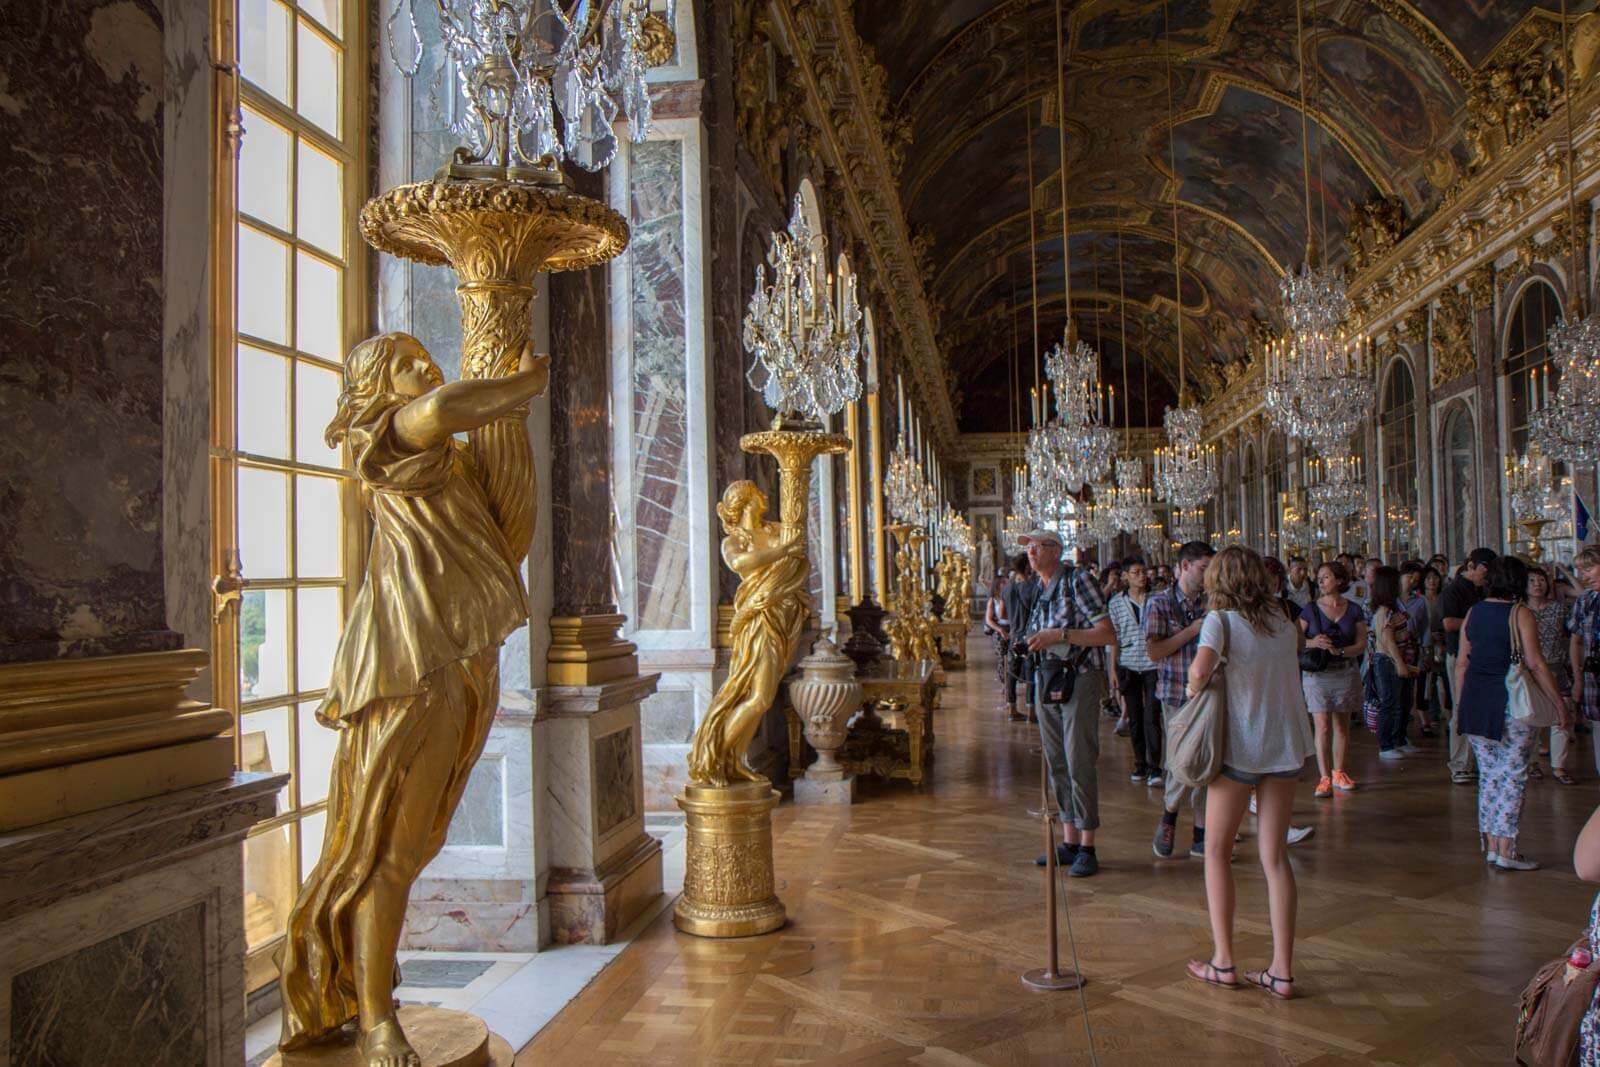 Галереи версаля. Версальский дворец Версаль Франция. Зеркальная галерея Версальского дворца. Версальский дворец внутри зеркальная галерея. Зеркальный зал Версальского дворца.